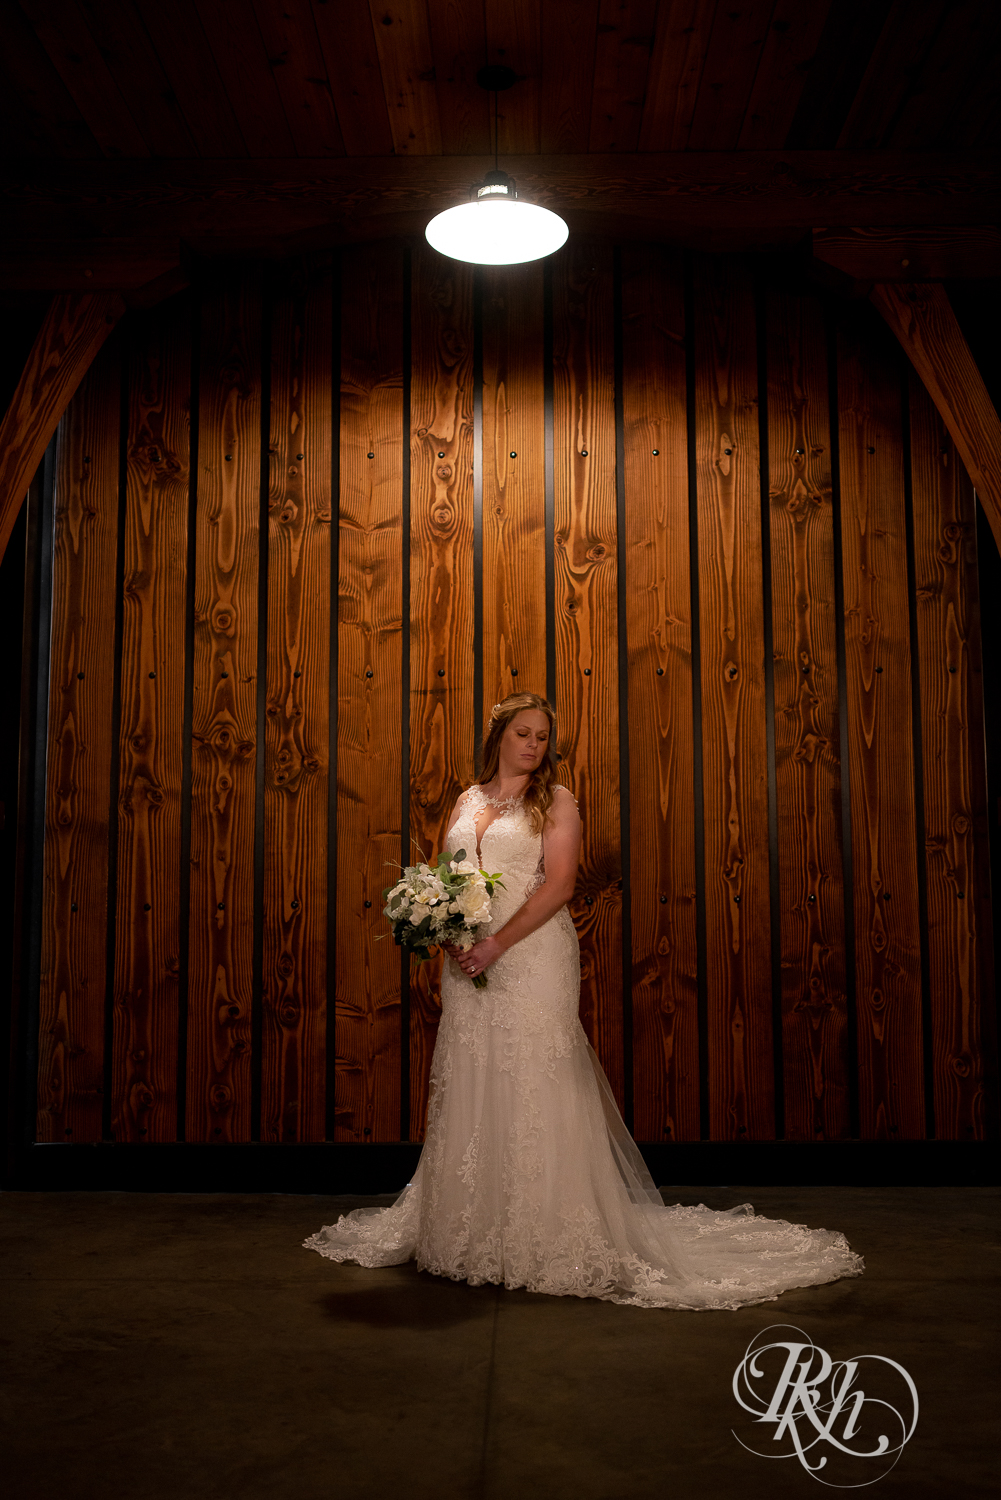 Bride holding flowers under light at 7 Vines Vineyard in Dellwood, Minnesota.